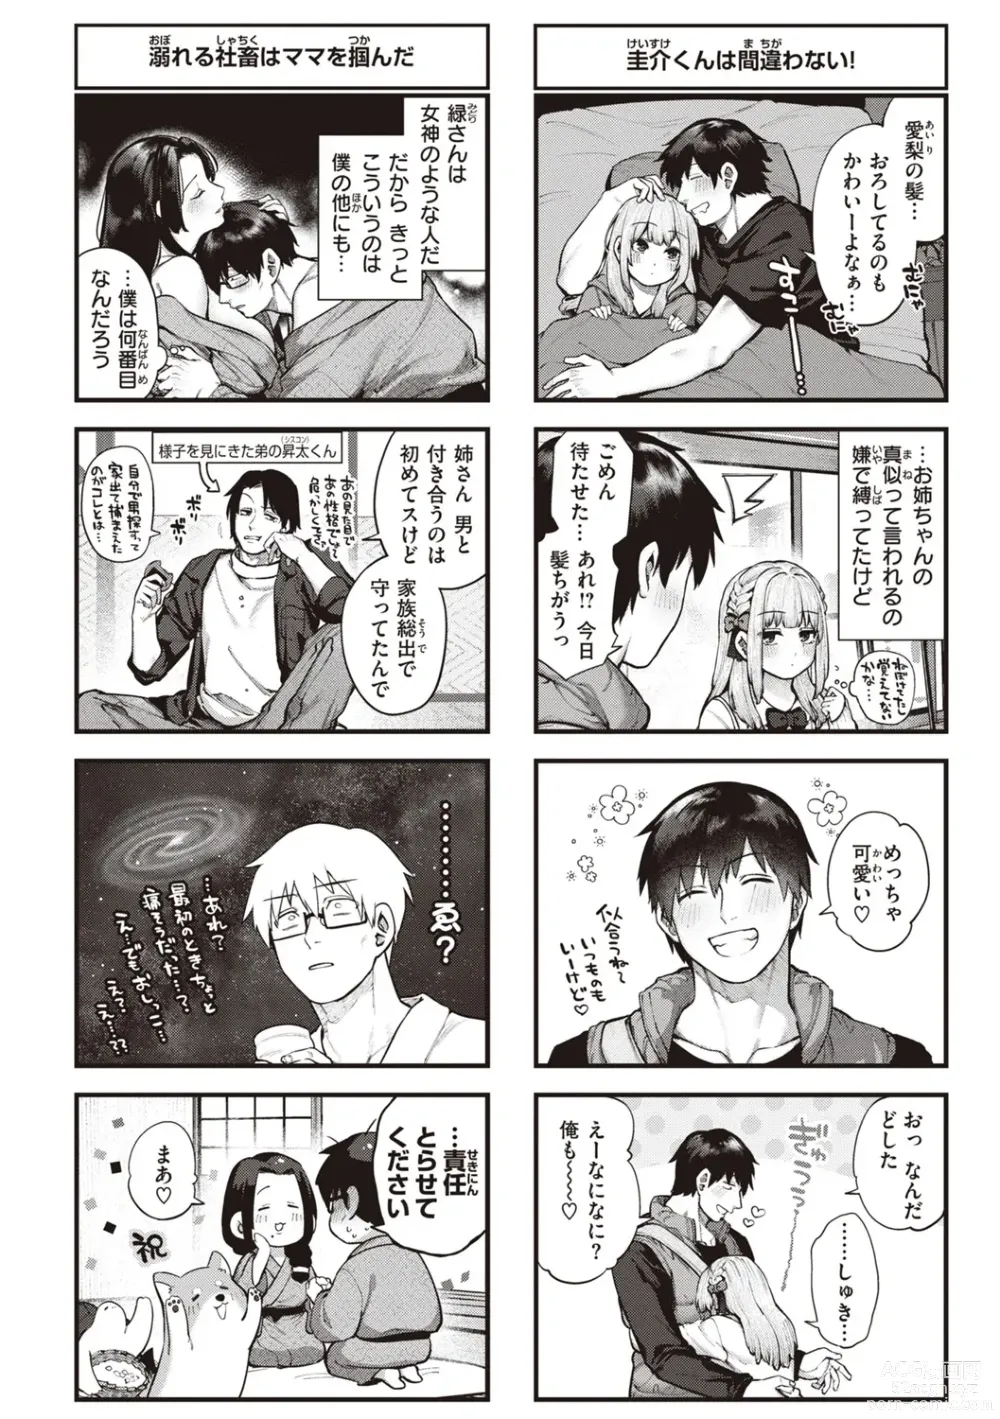 Page 174 of manga DA-DA-MO-RE